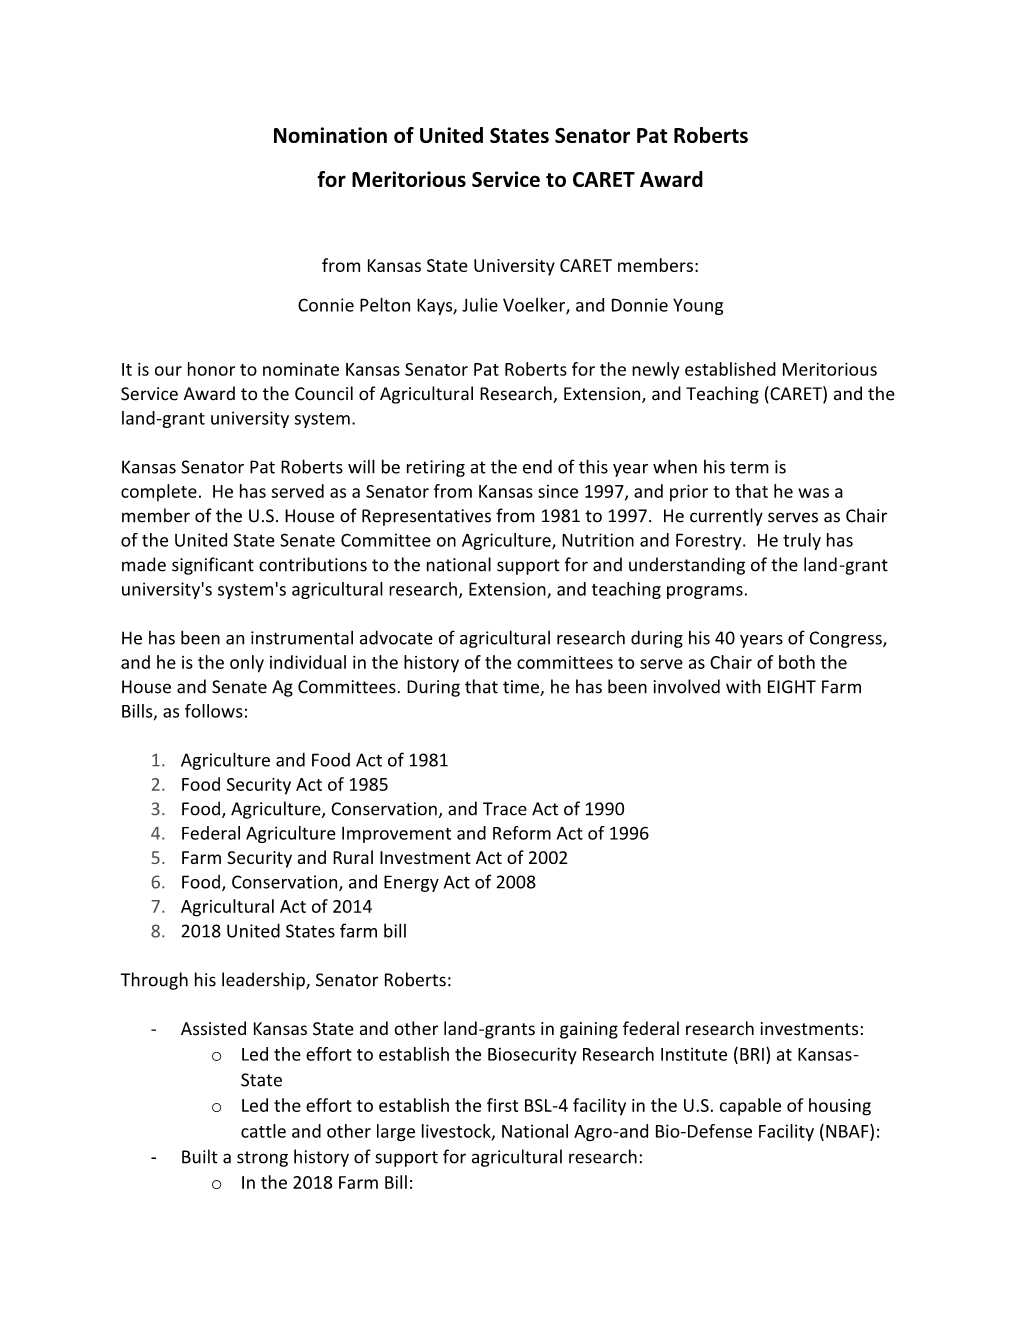 Nomination of United States Senator Pat Roberts for Meritorious Service to CARET Award